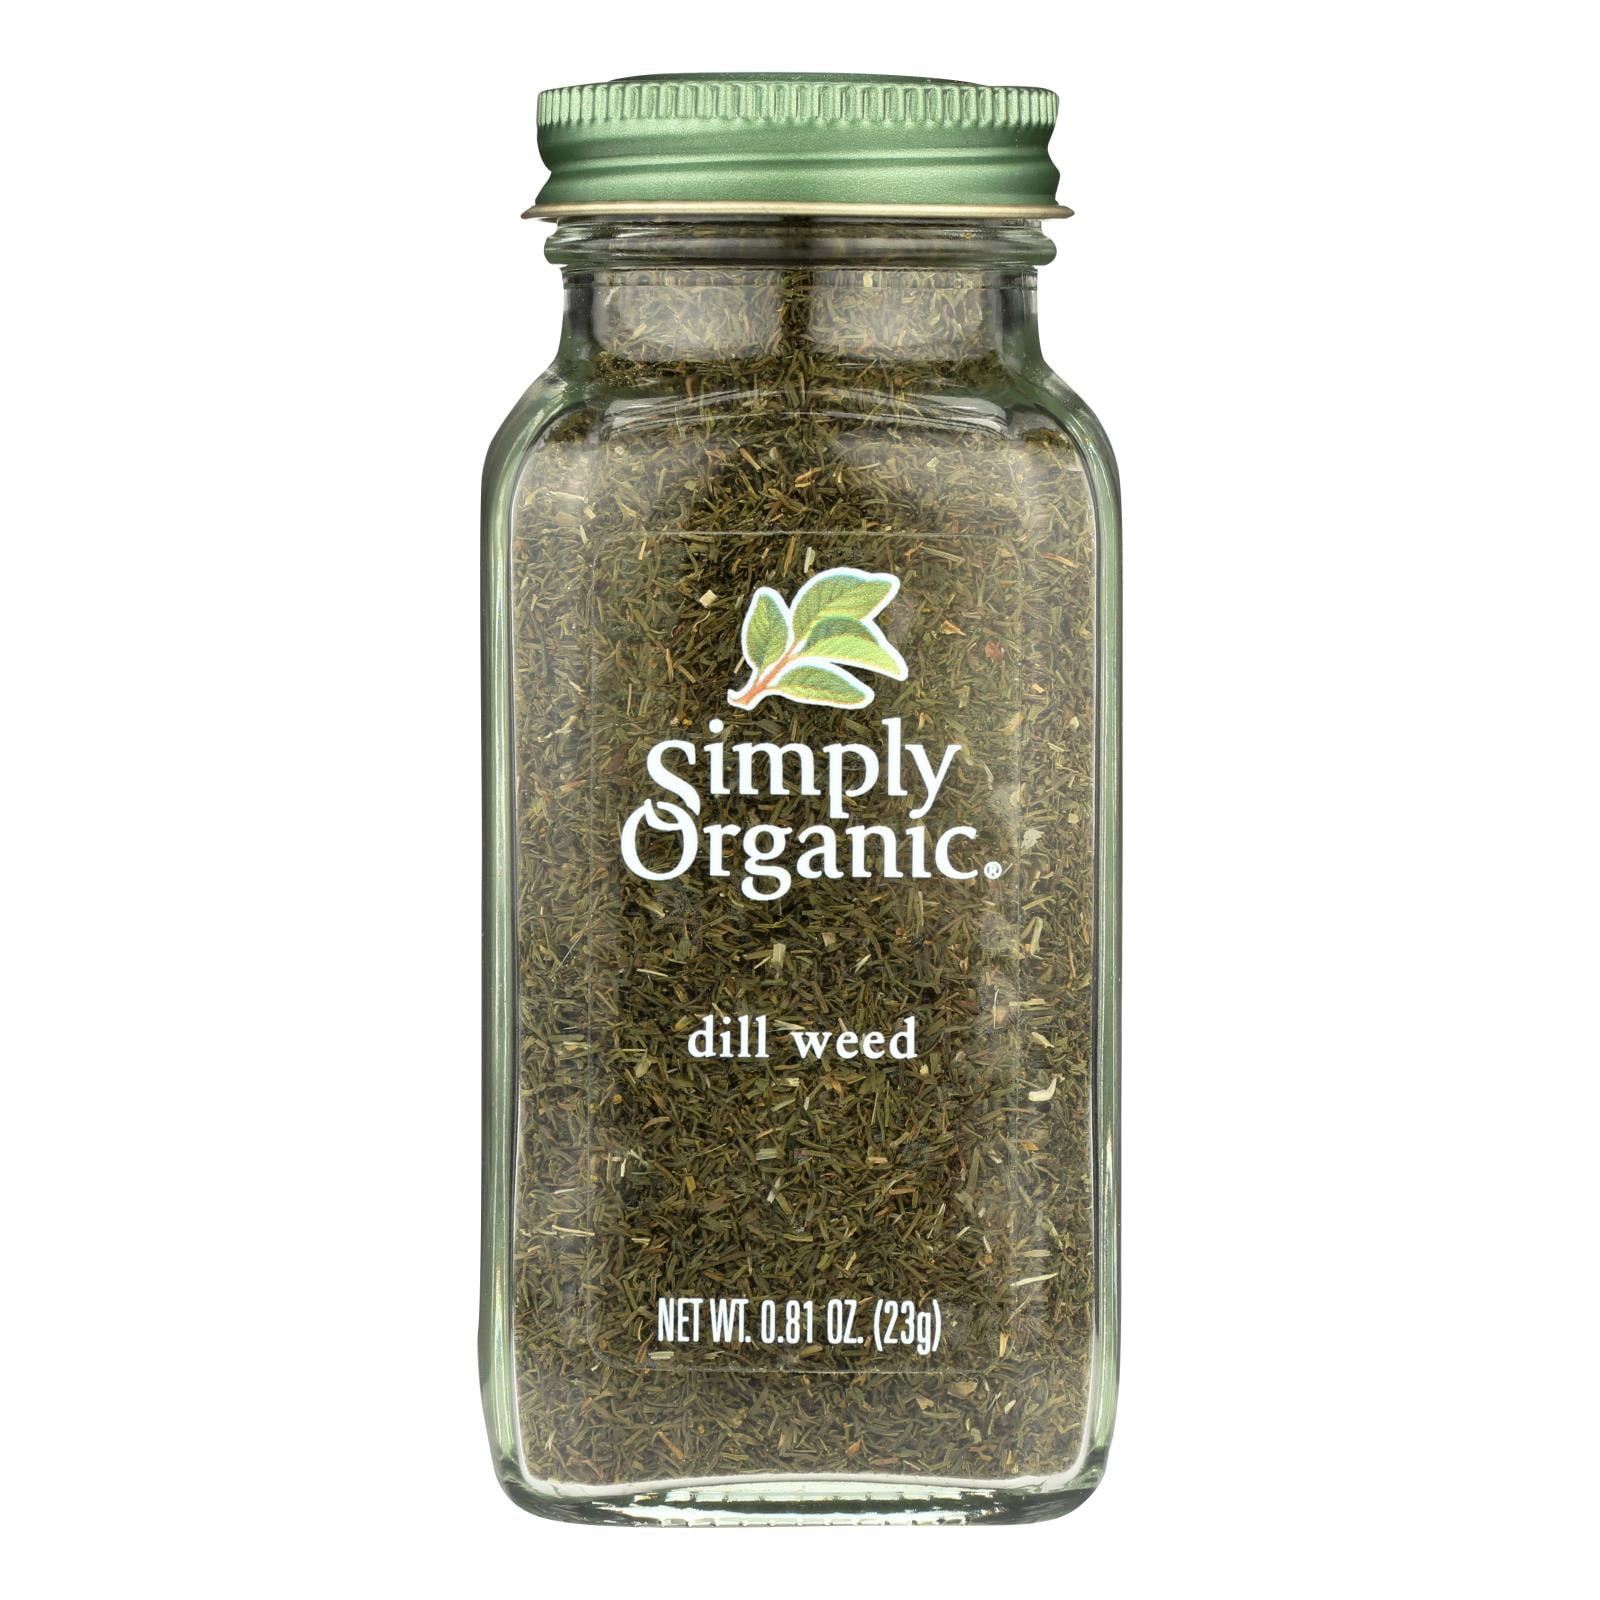 Simply Organic Dill Weed - Organic - .81 oz - Walmart.com - Walmart.com